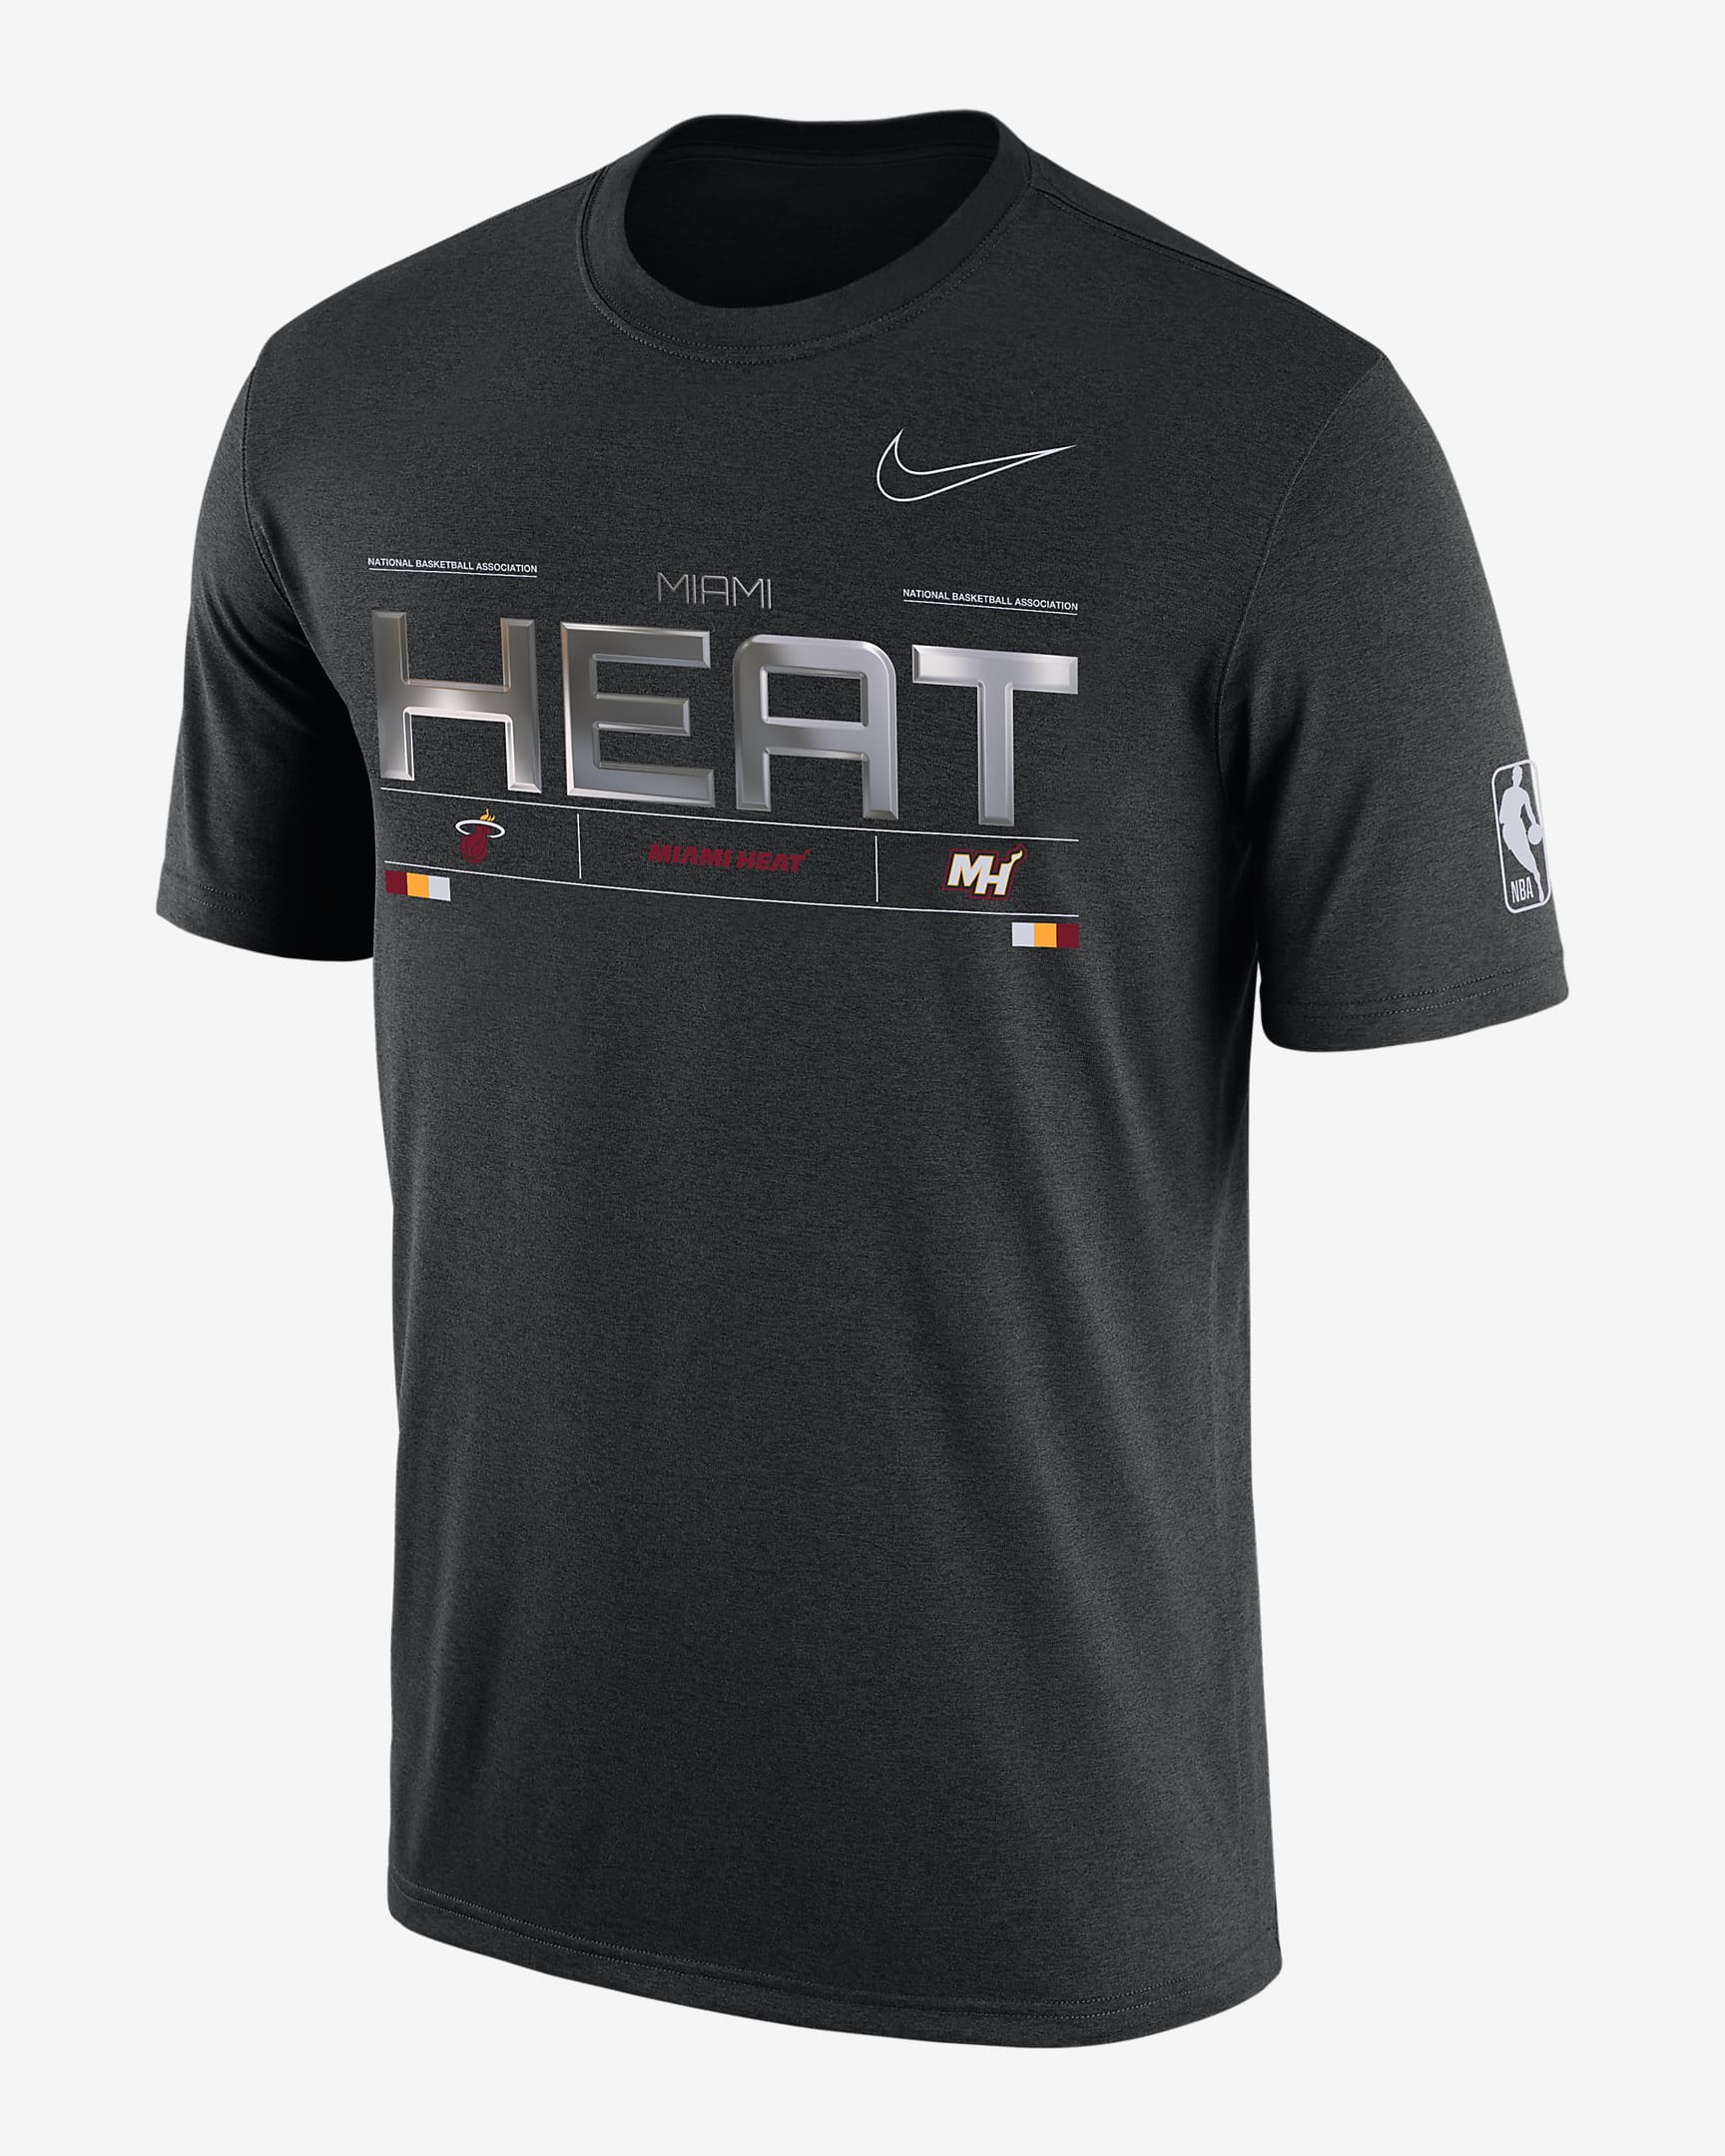 Playera Nike de la NBA para hombre Miami Heat Essential.